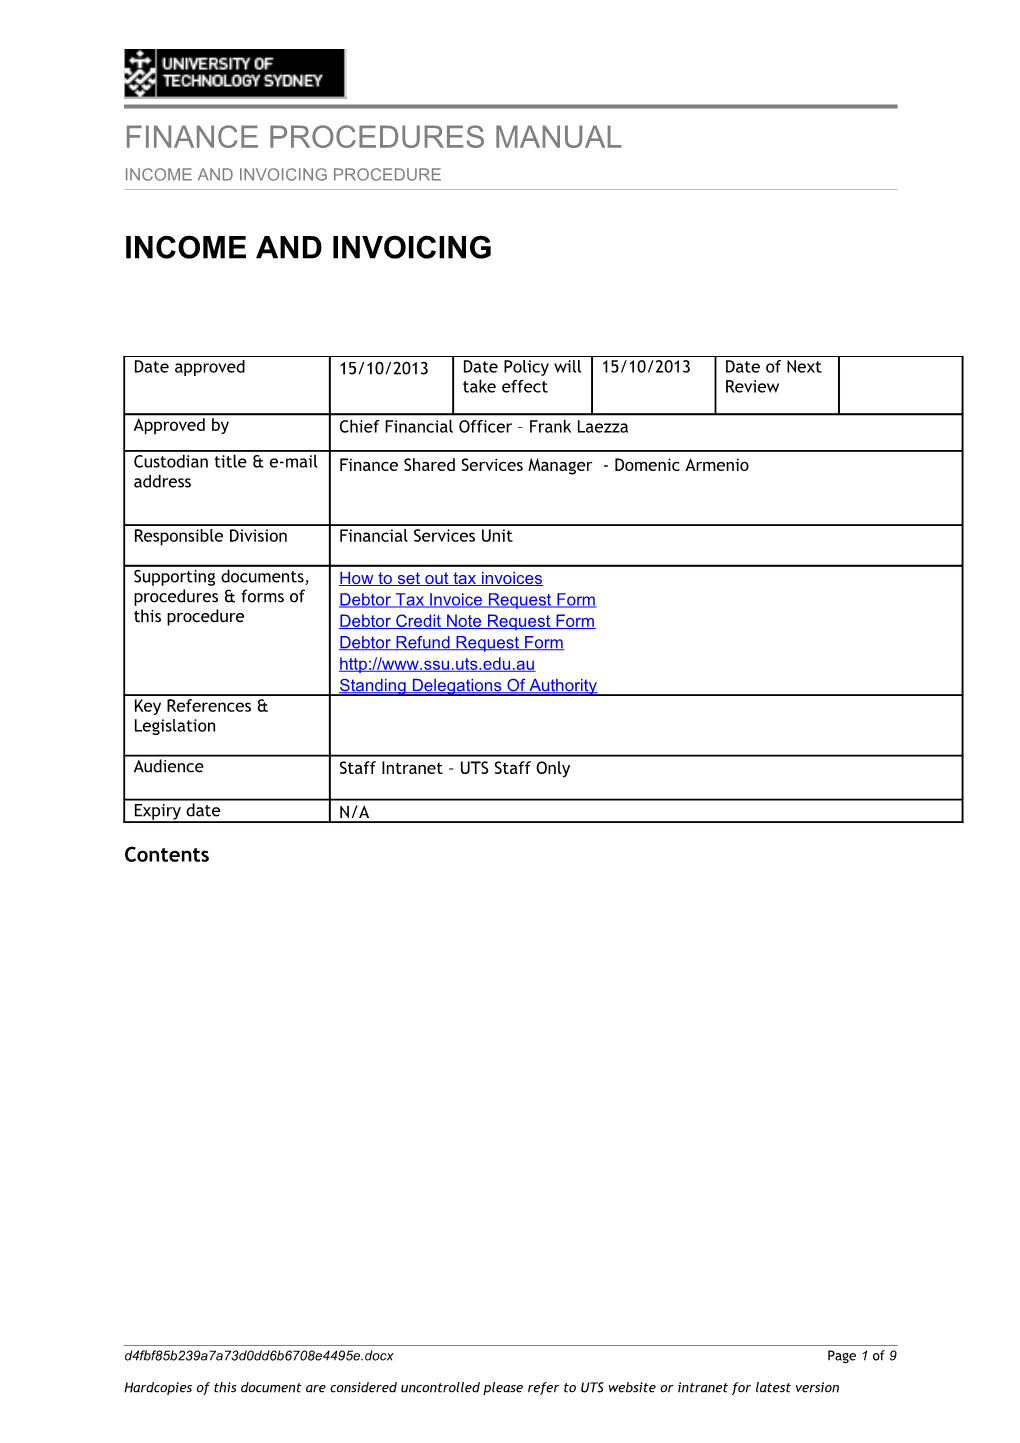 Income and Invoicing Procedure